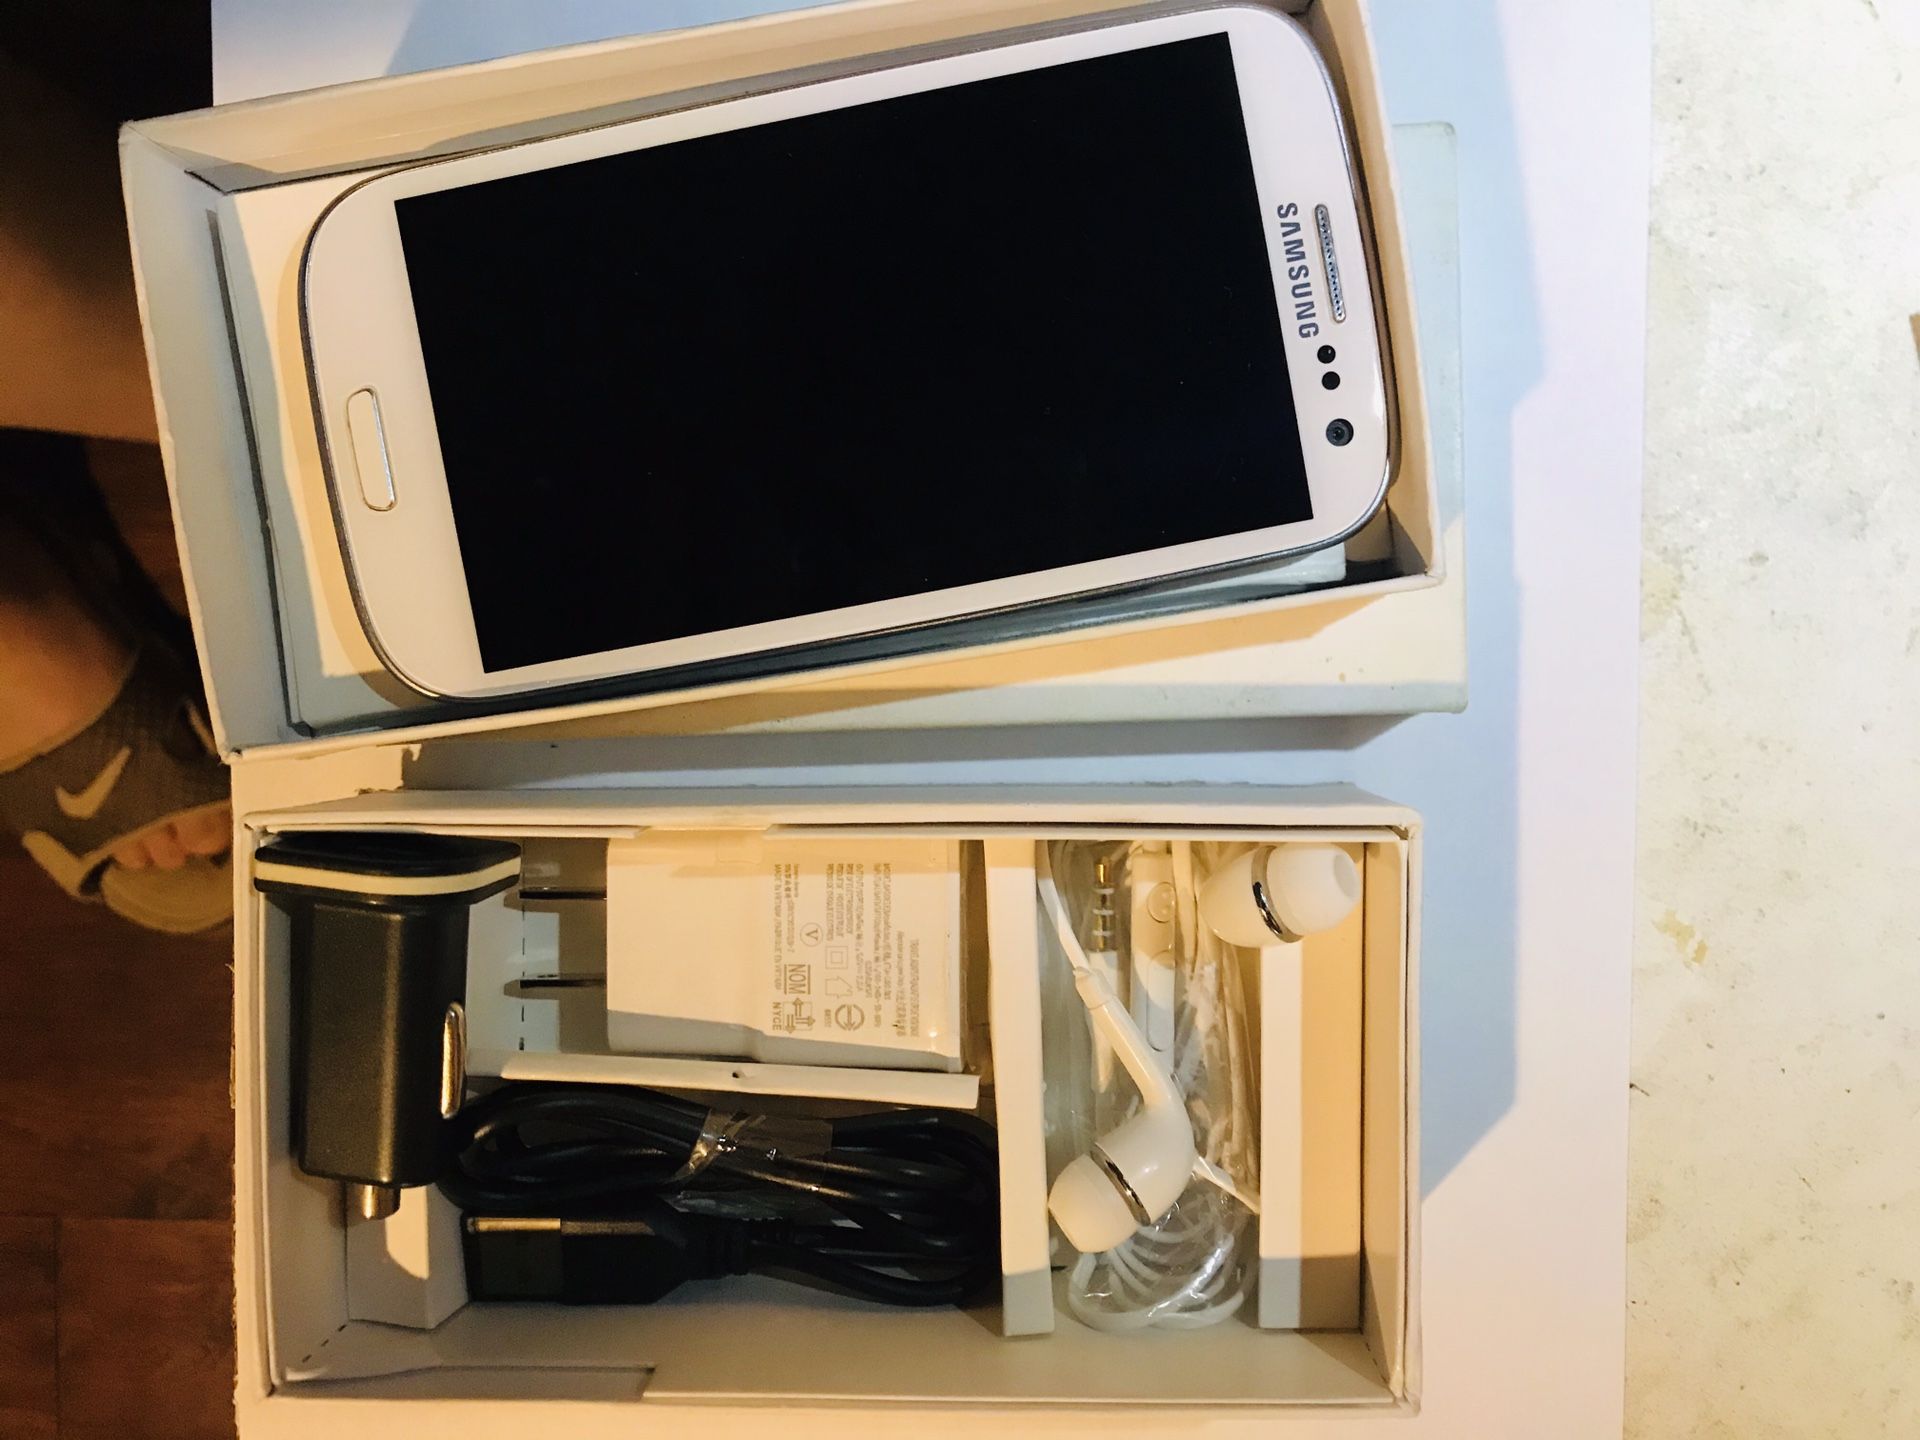 Samsung galaxy s3. 👍🏻Smart phone unlock